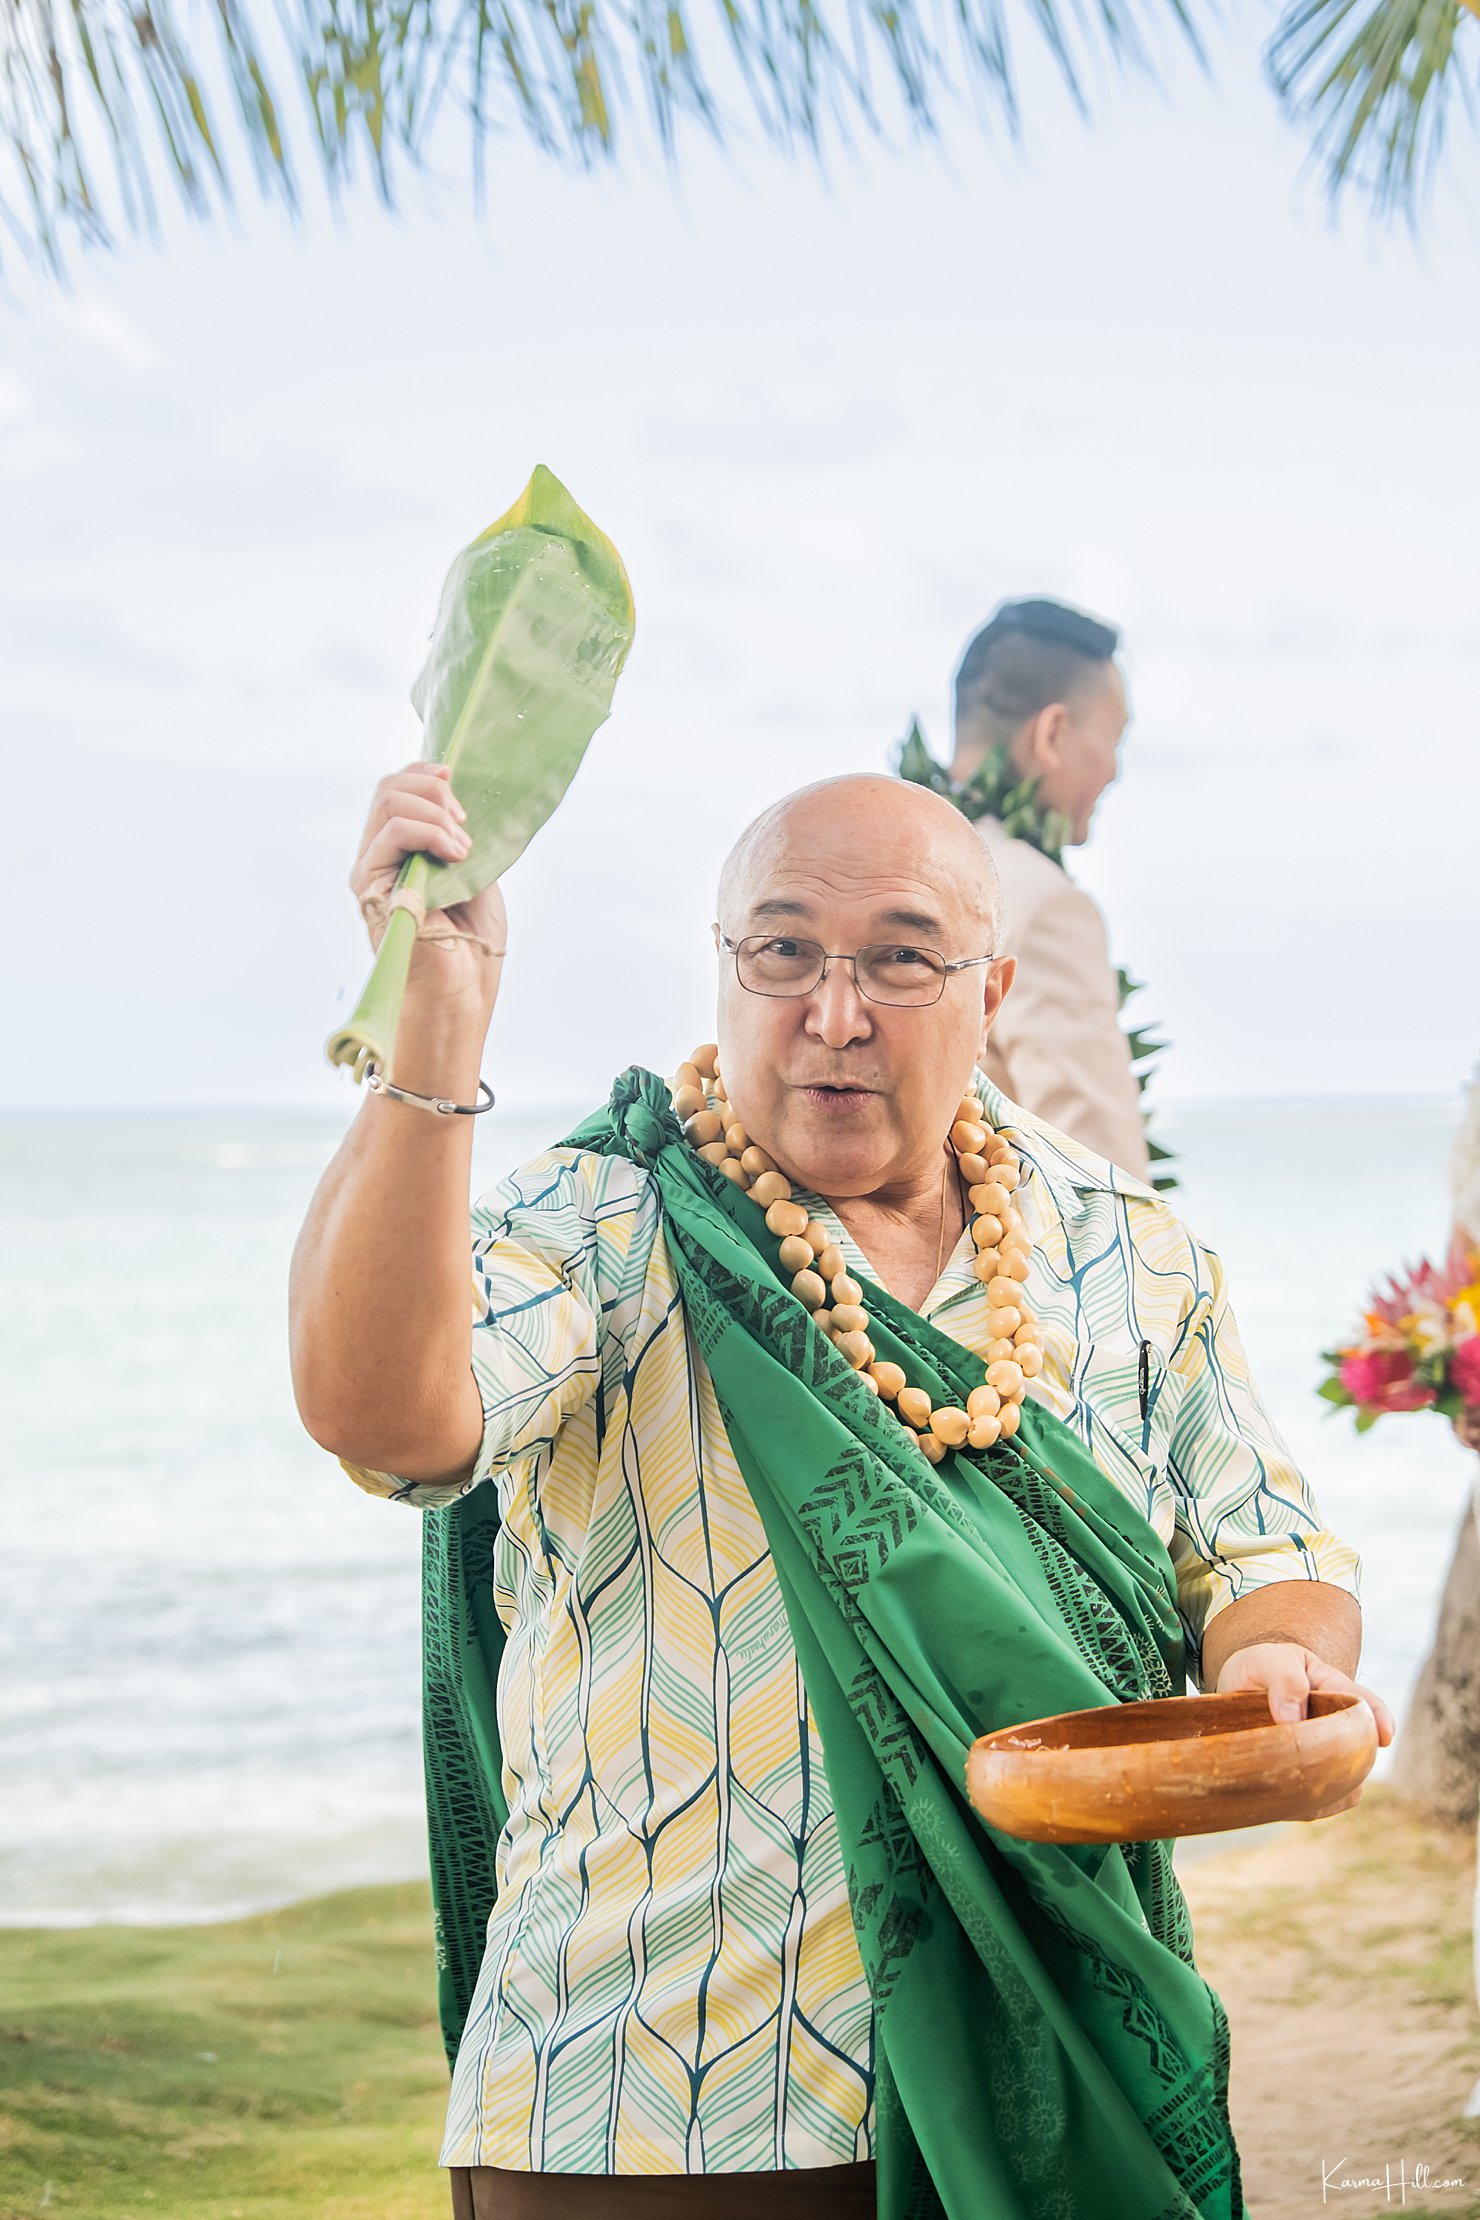 Oahu wedding officiants